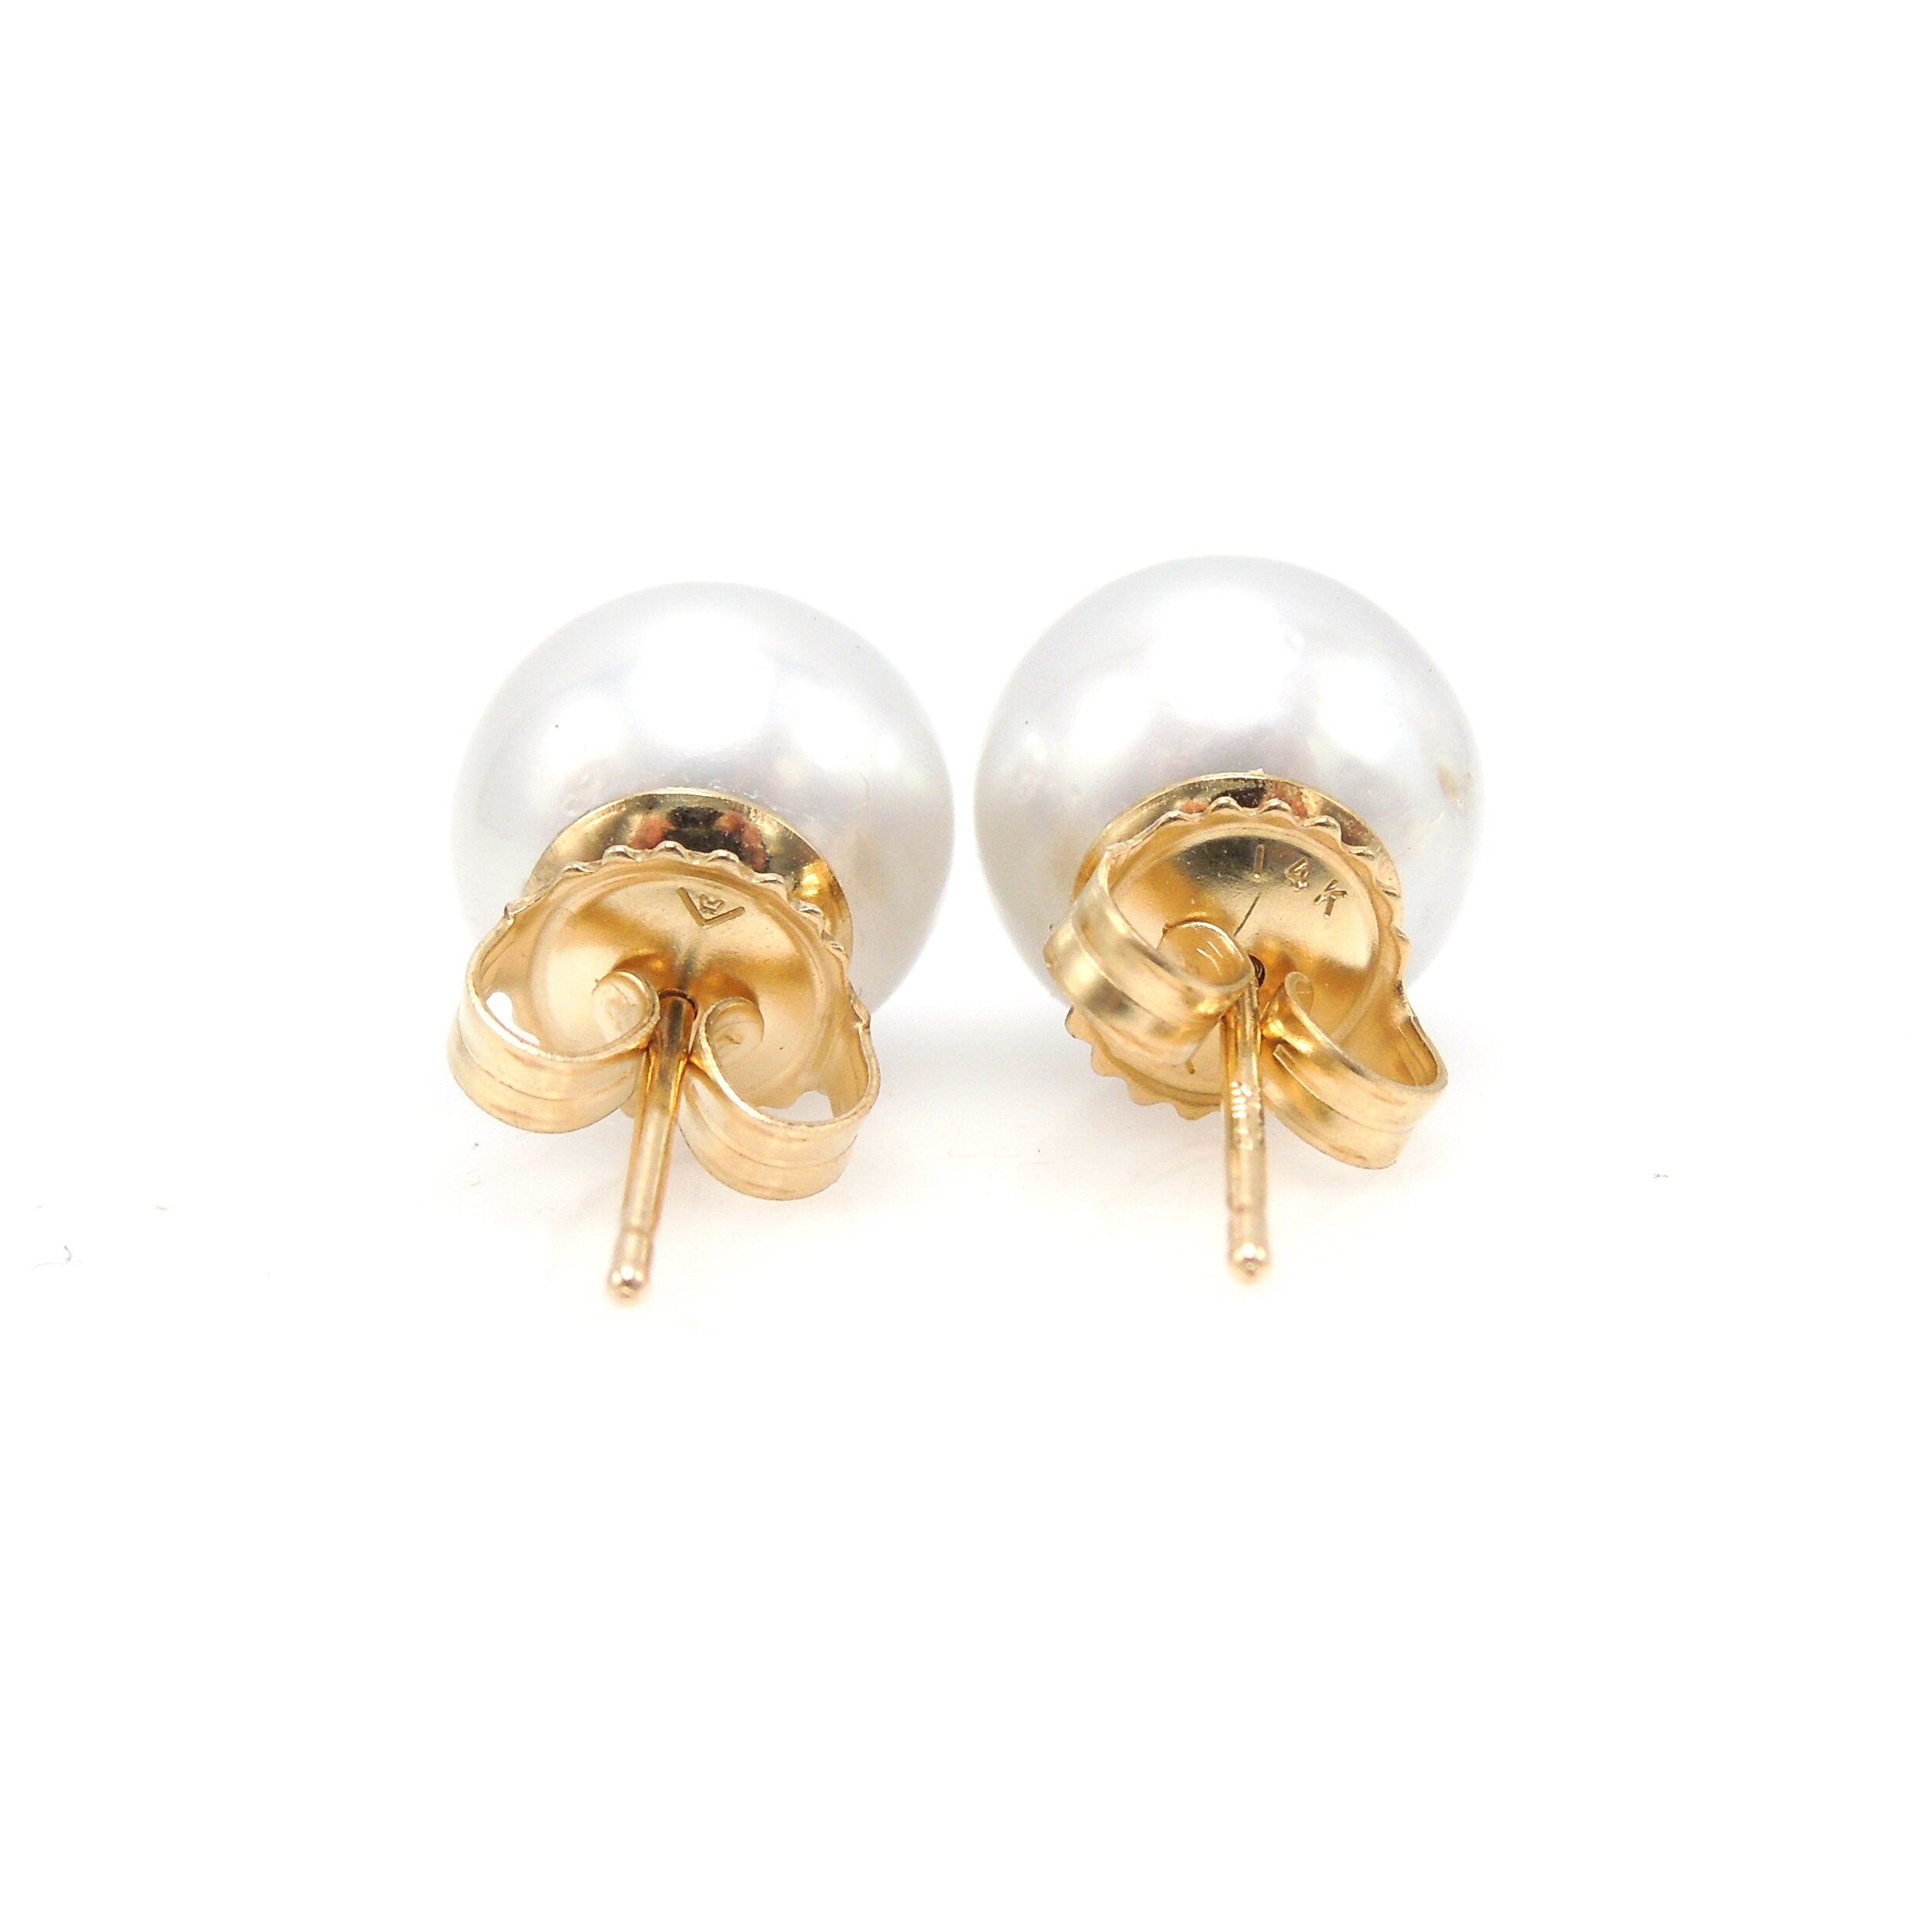 9.5mm Gray South Sea Pearl Stud Earrings in 14K Yellow Gold